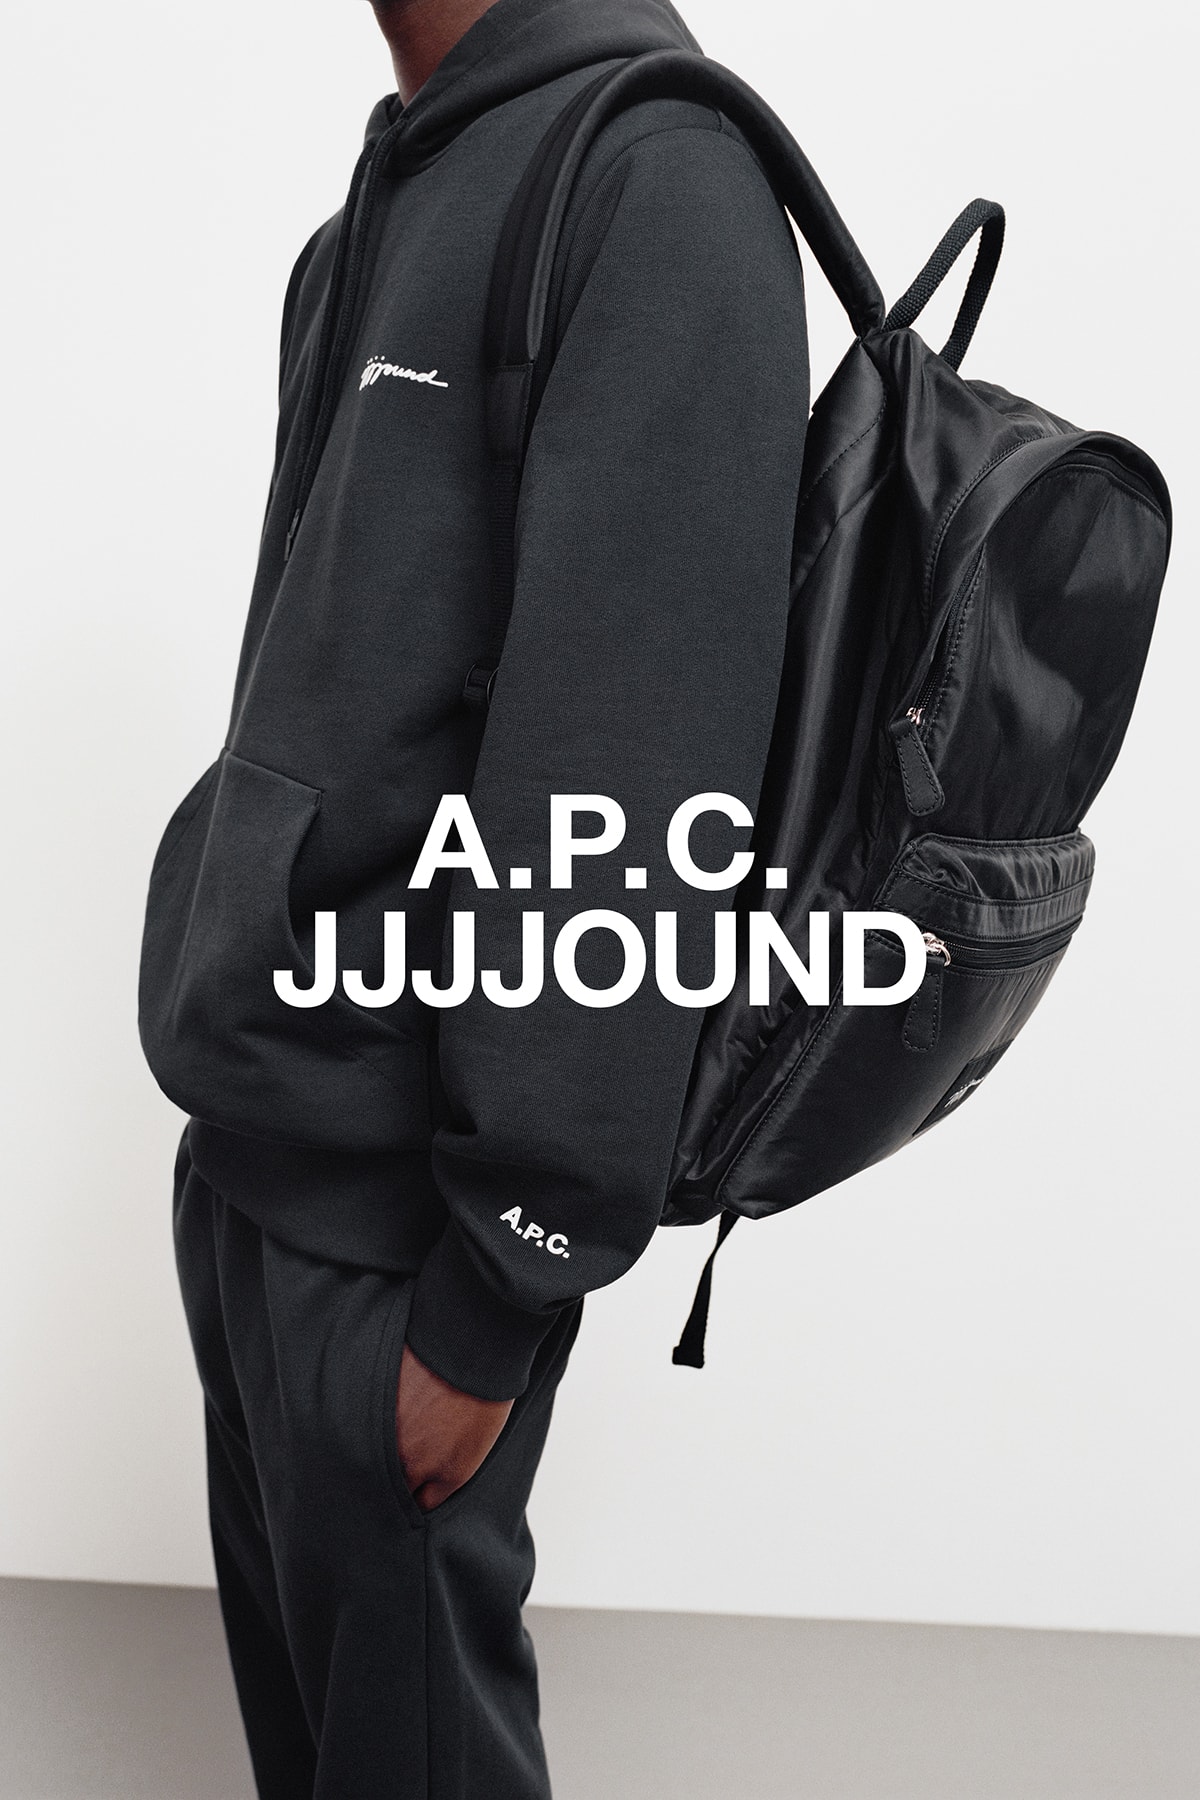 JJJJound x A.P.C. Collection Lookbook Backpack Black